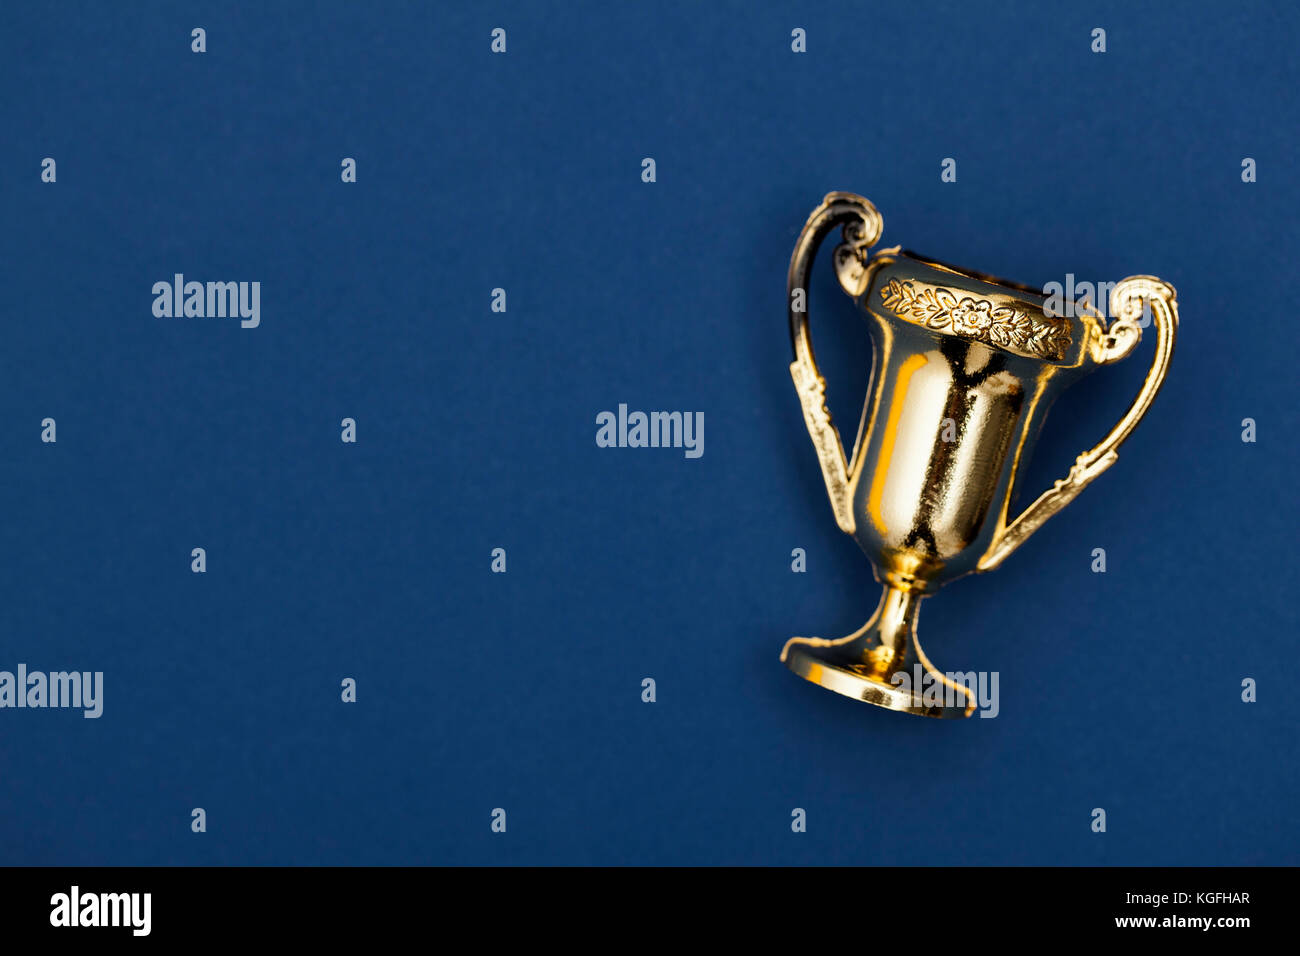 Gold winners achievement trophy background Stock Photo